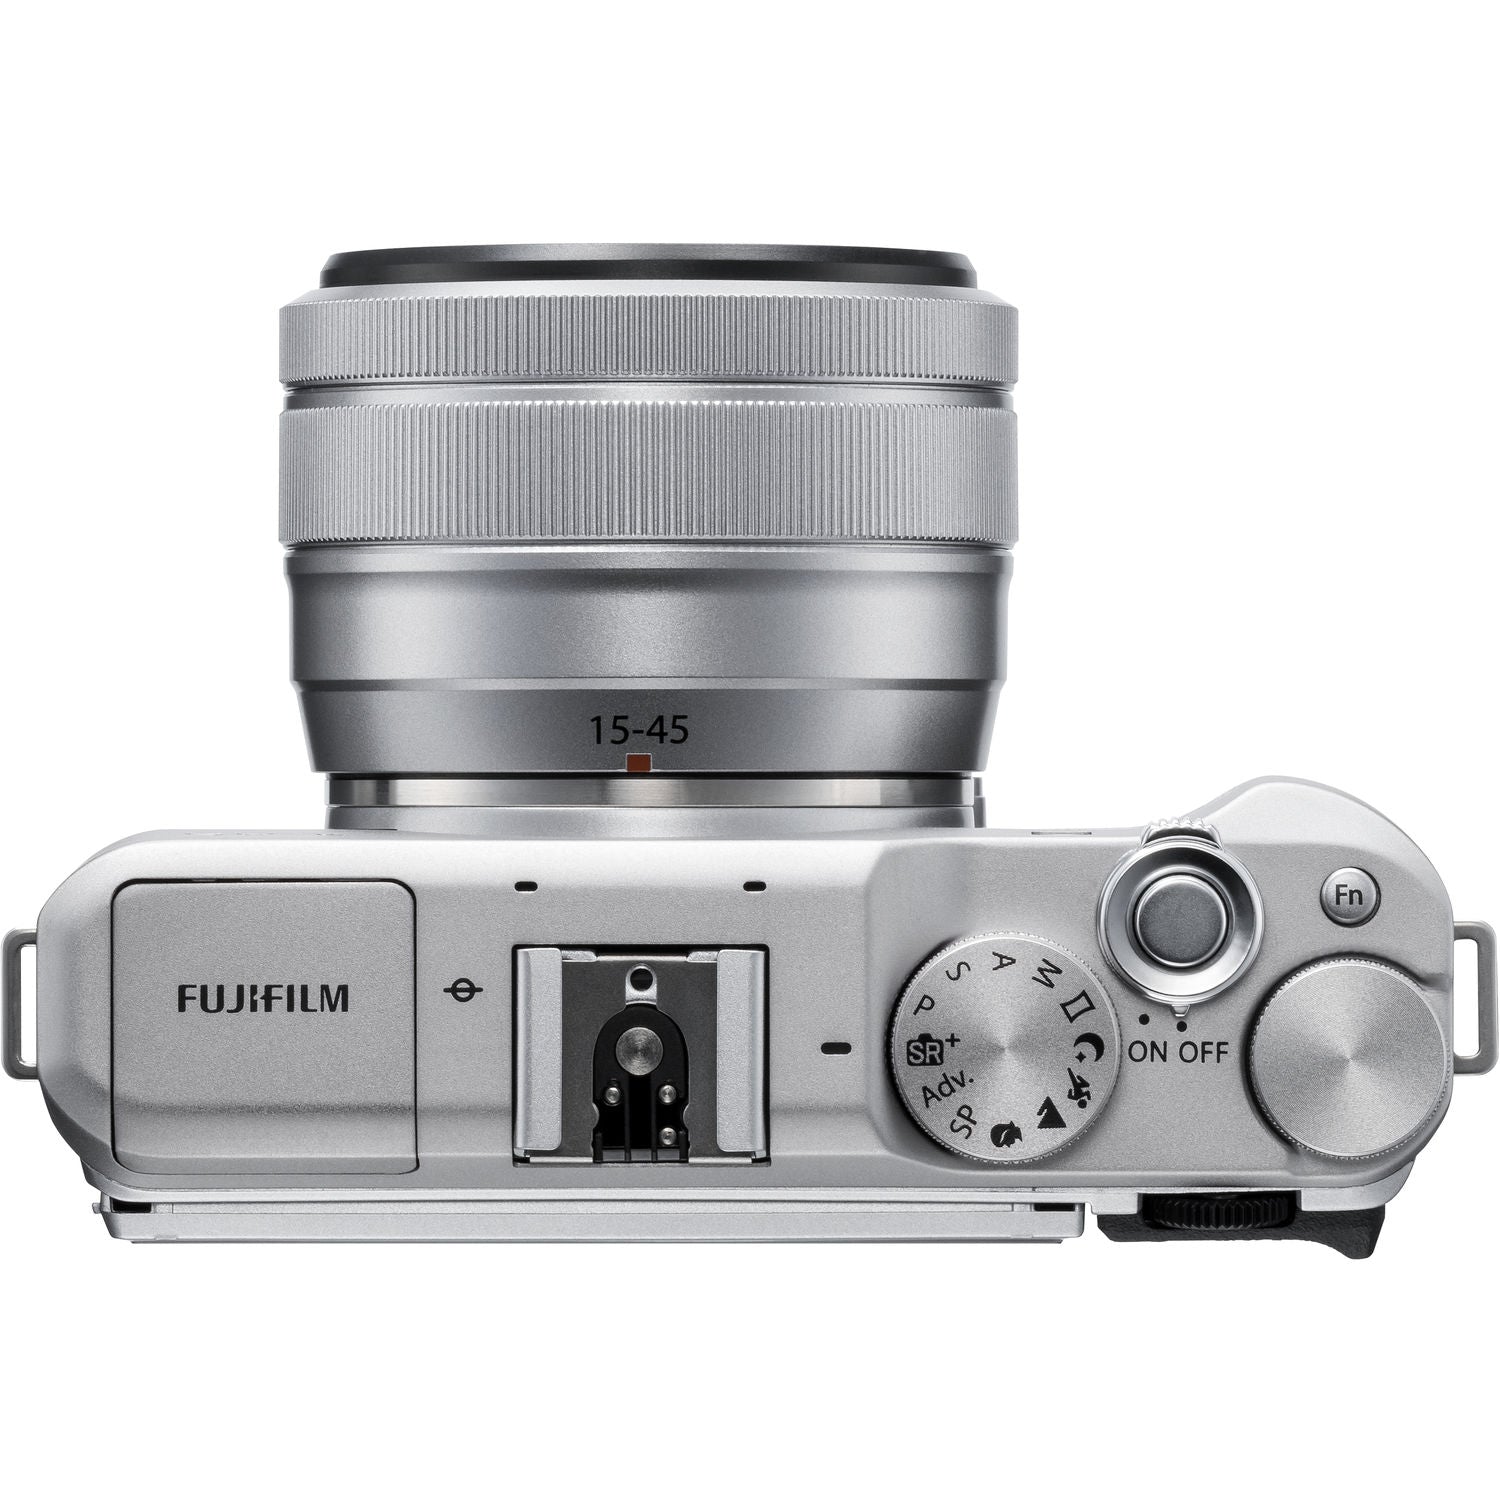 FUJIFILM X-A5 Mirrorless Digital Camera with 15-45mm Lens (Pink)